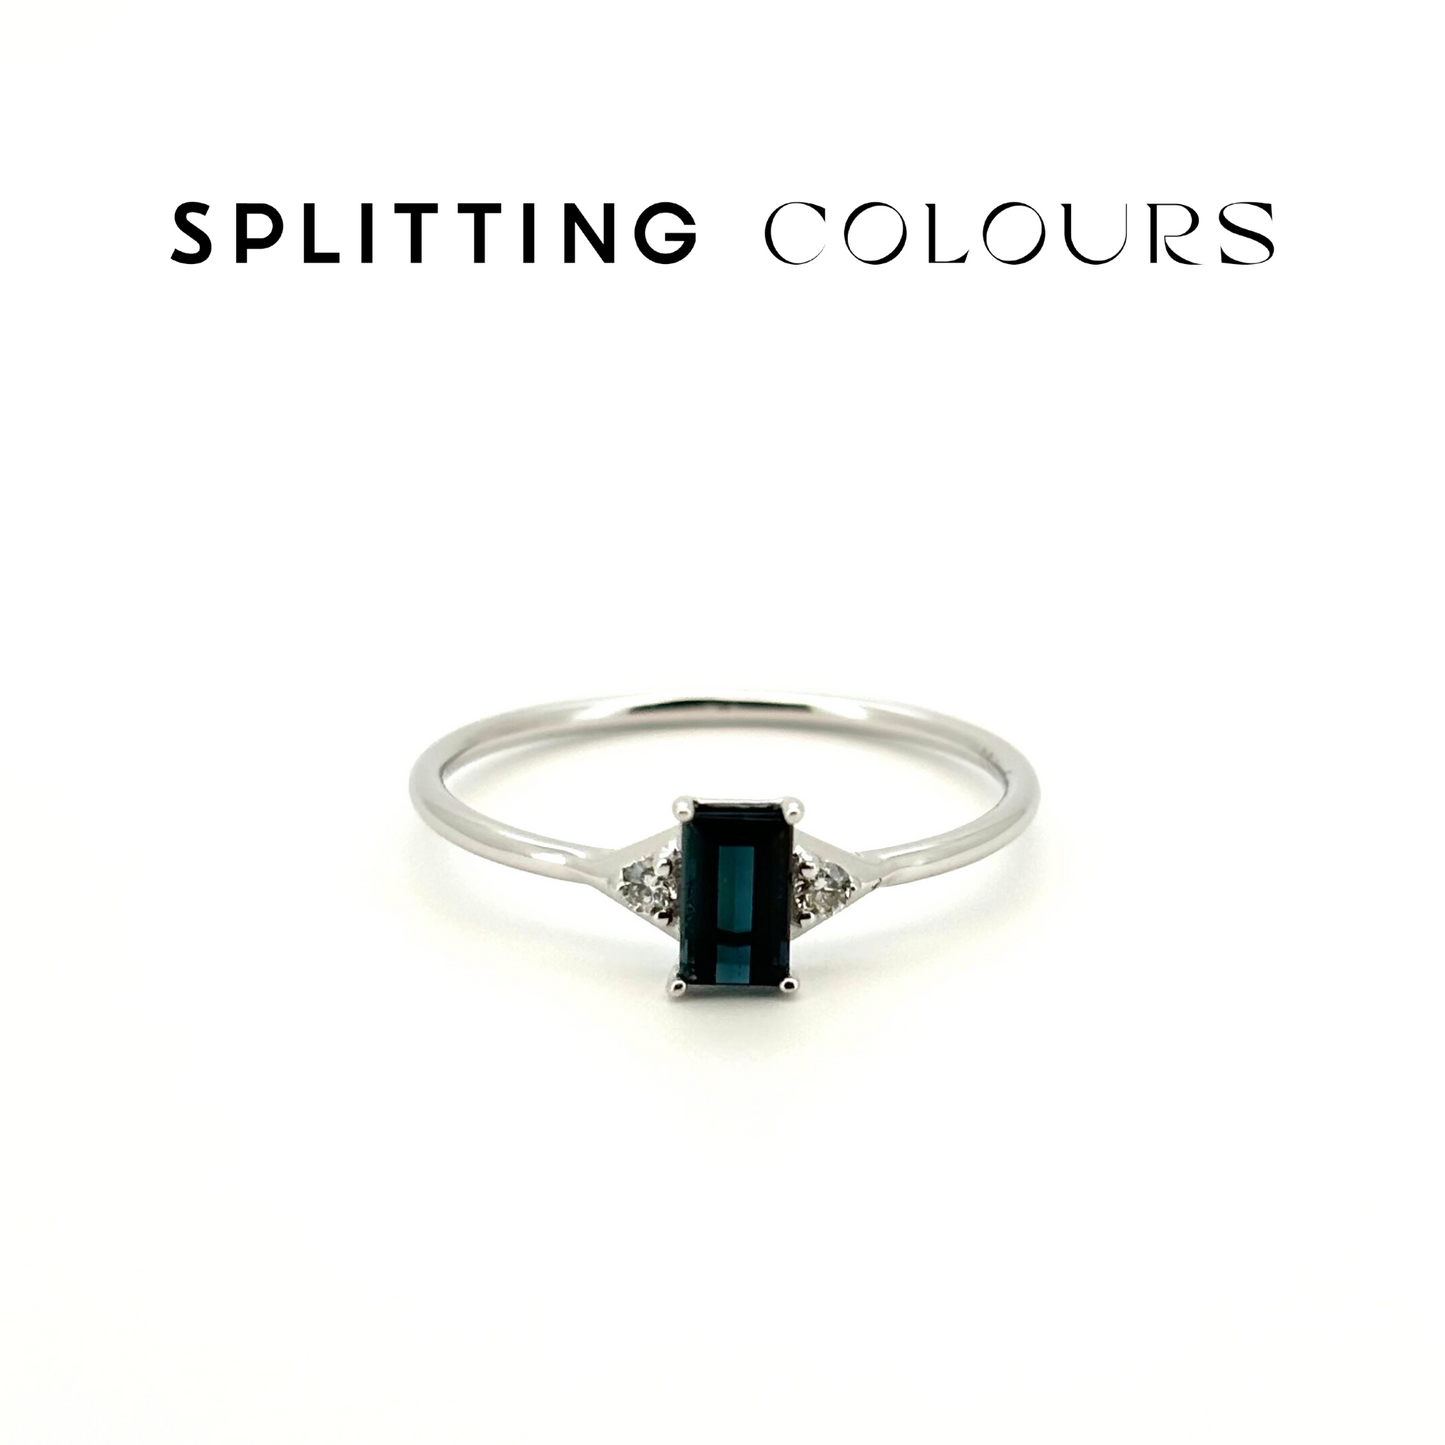 The Petite Ring - 0.35ct Indicolite Tourmaline with Diamonds